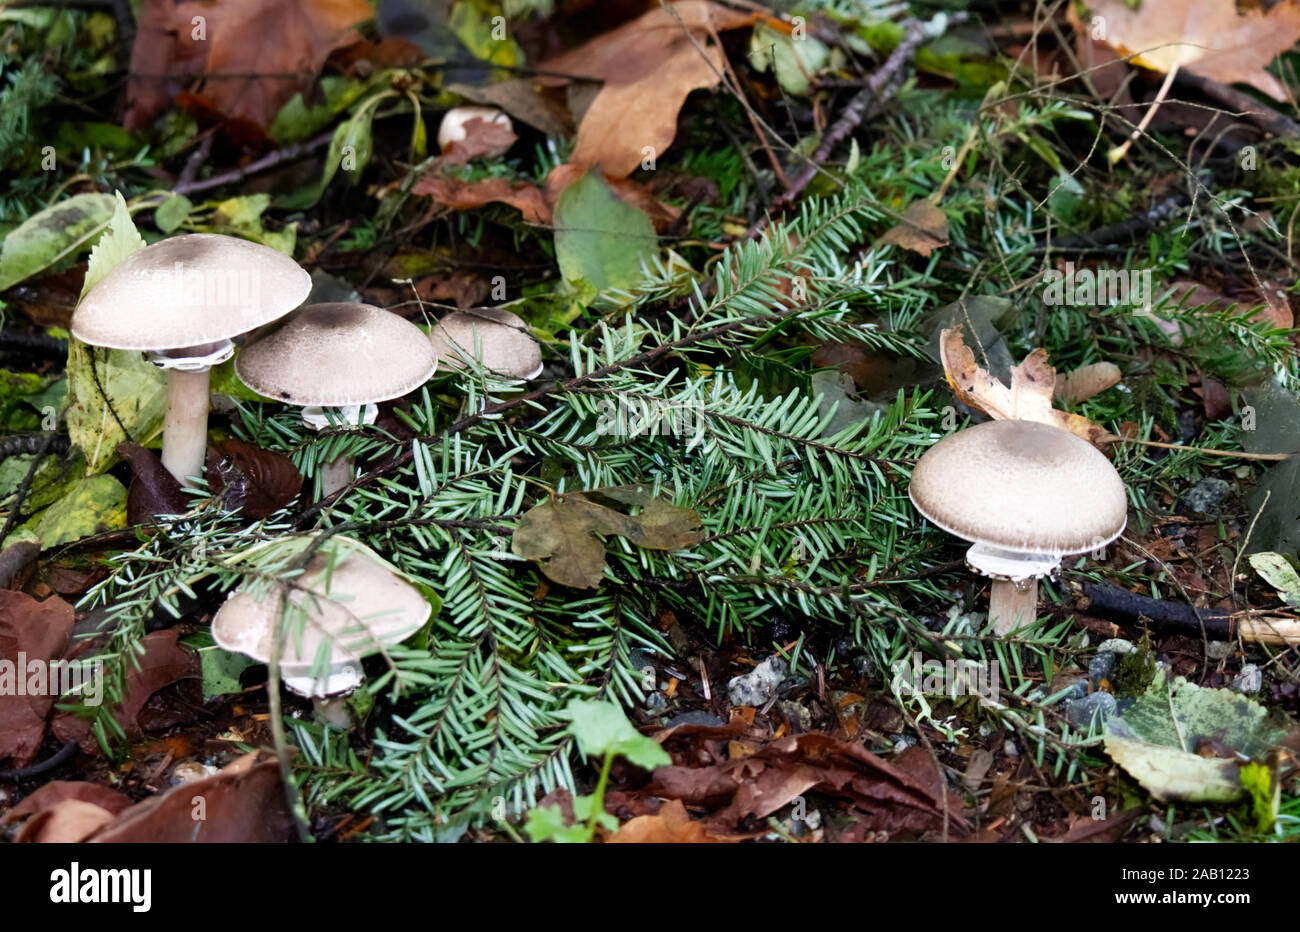 Amanita porphyria - inedible basidiomycete mushroom of the genus Amanita found in Vancouver, Canada. Poisonous mushrooms in the forest. Stock Photo